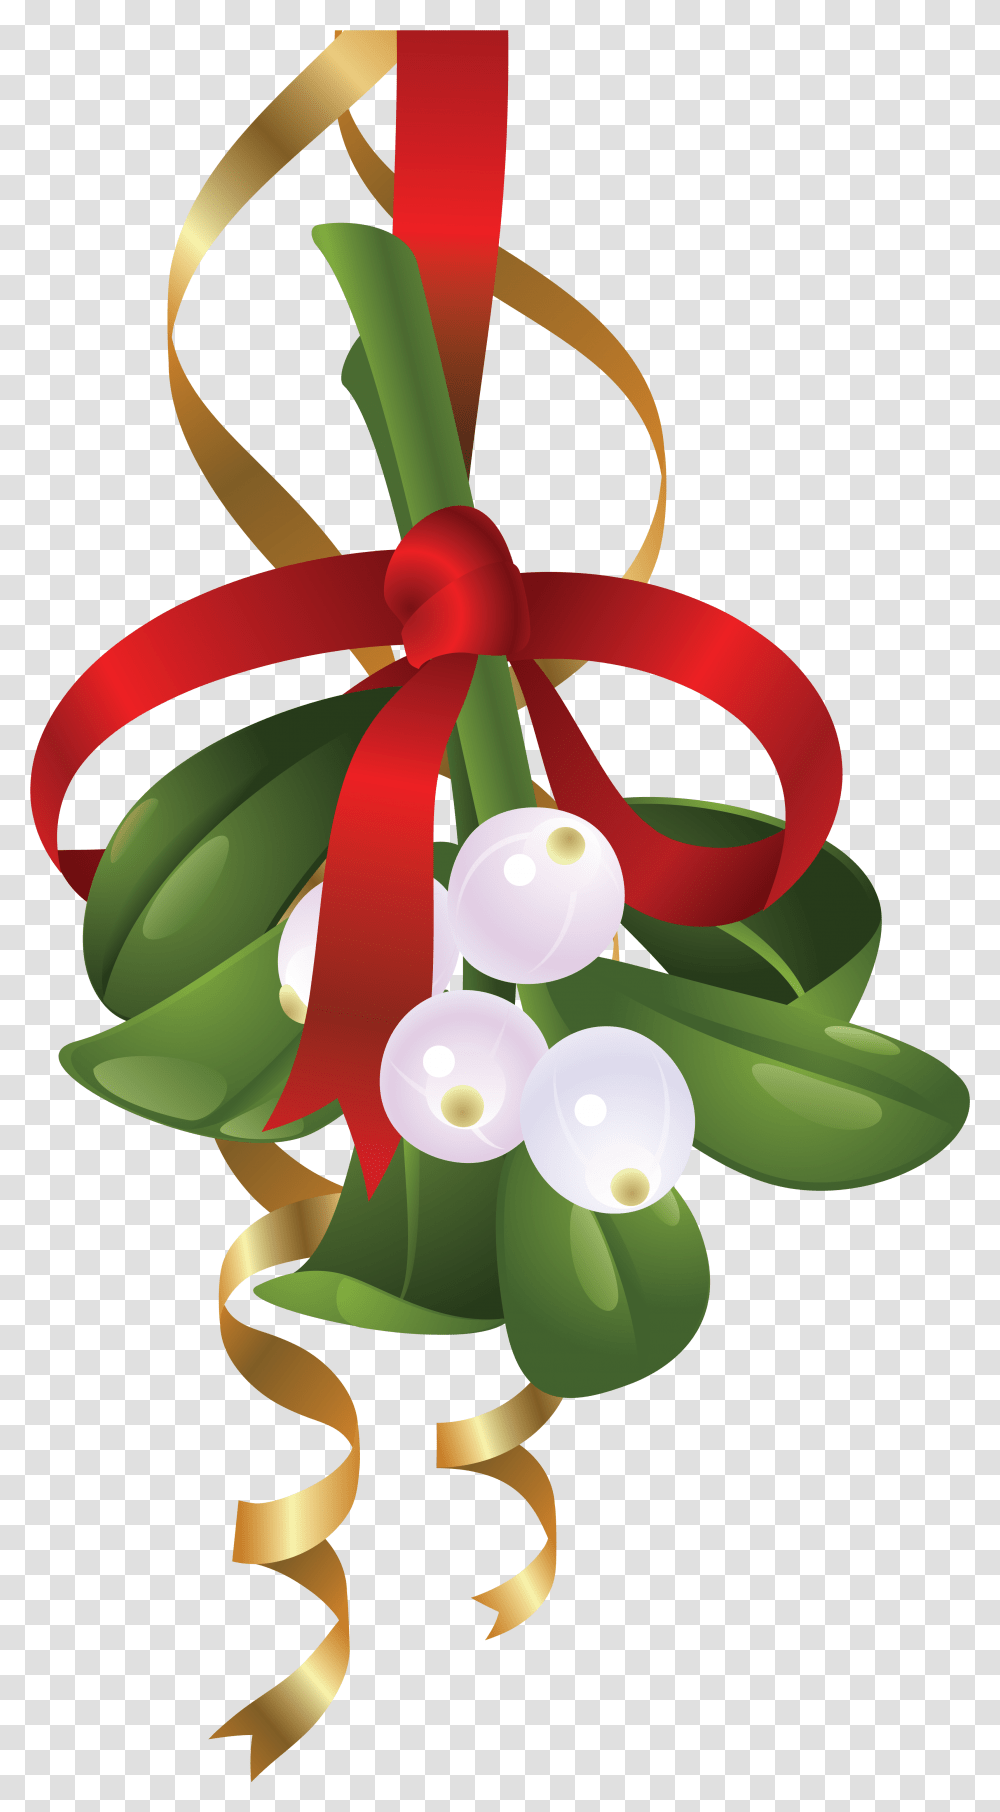 Mistletoe Portable Network Graphics Clip Art Illustration Free Christmas Mistletoe Clipart, Ornament, Plant, Flower, Blossom Transparent Png